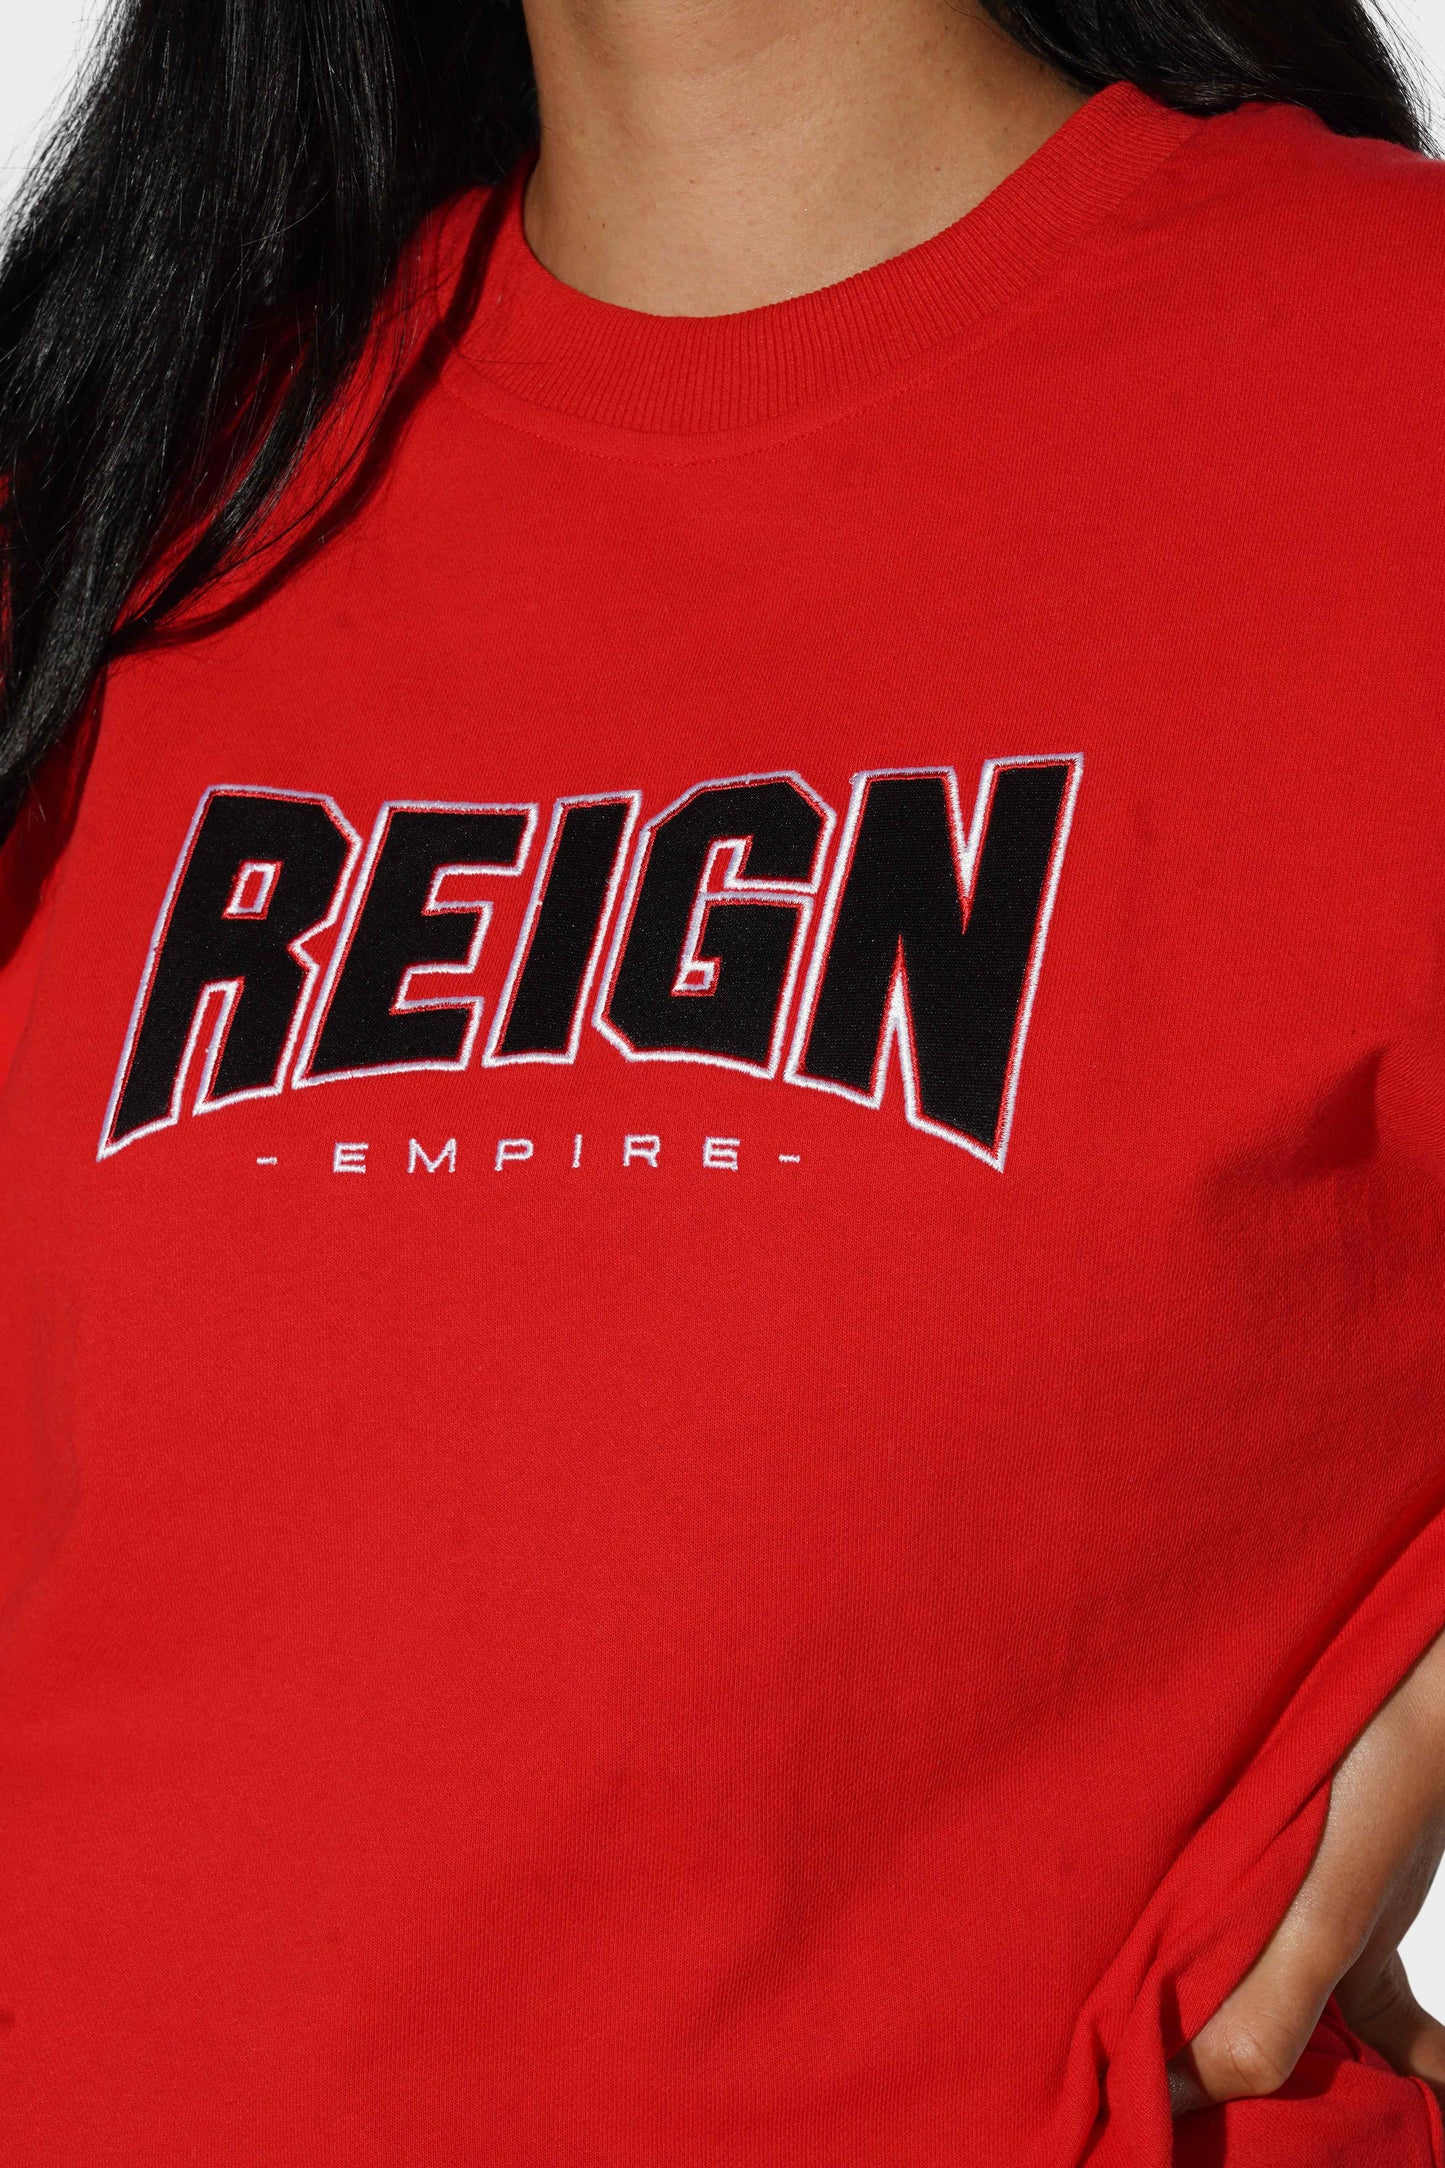 Reign Empire Block Tee Red/Black